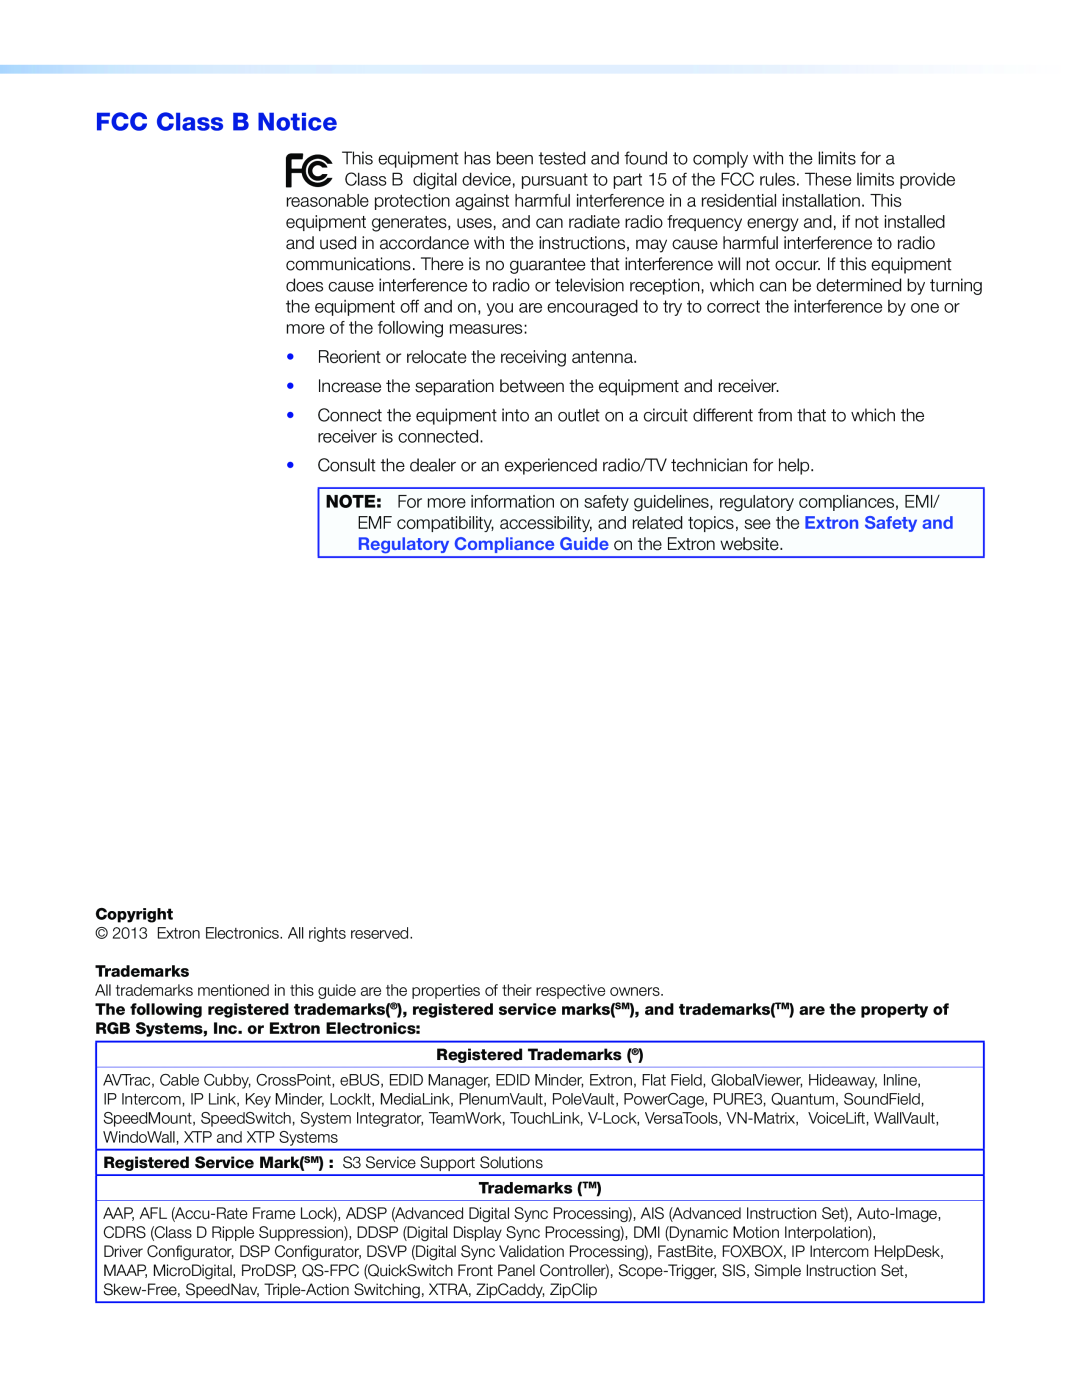 Extron electronic MPA 152 PLUS manual FCC Class B Notice, Regulatory Compliance Guide on the Extron website 